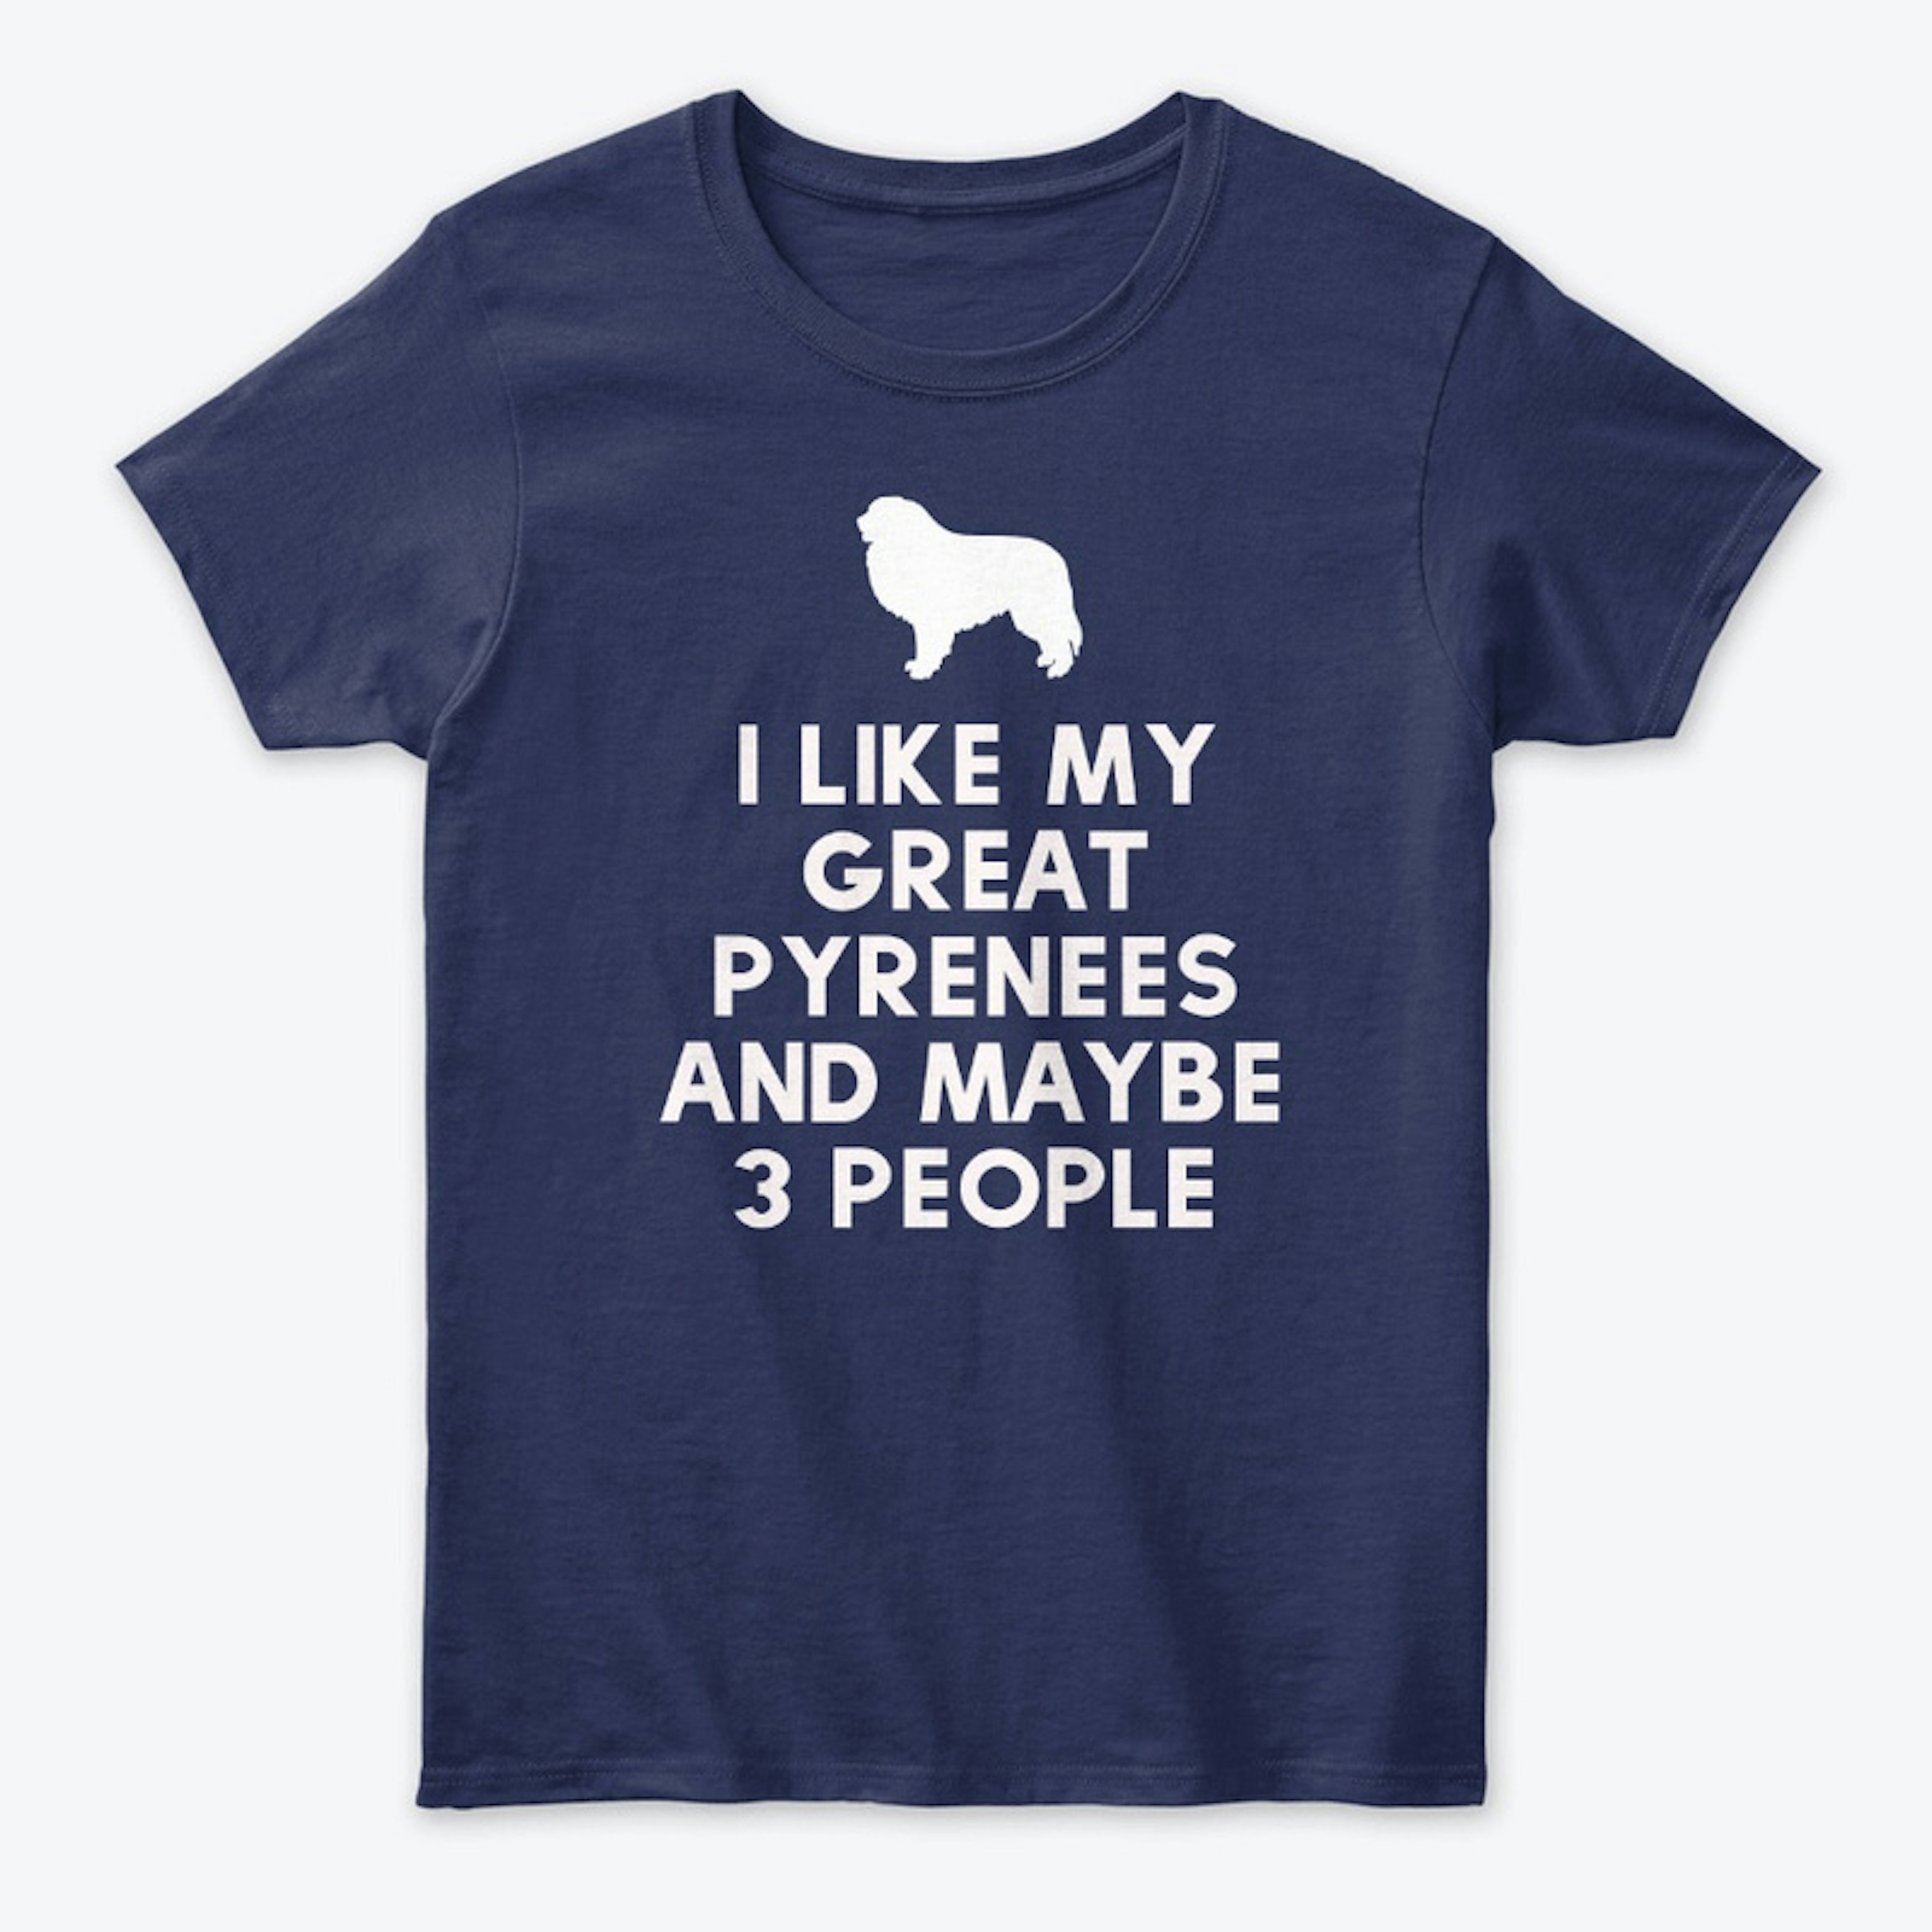 I Like My Pyrenees (and three people)